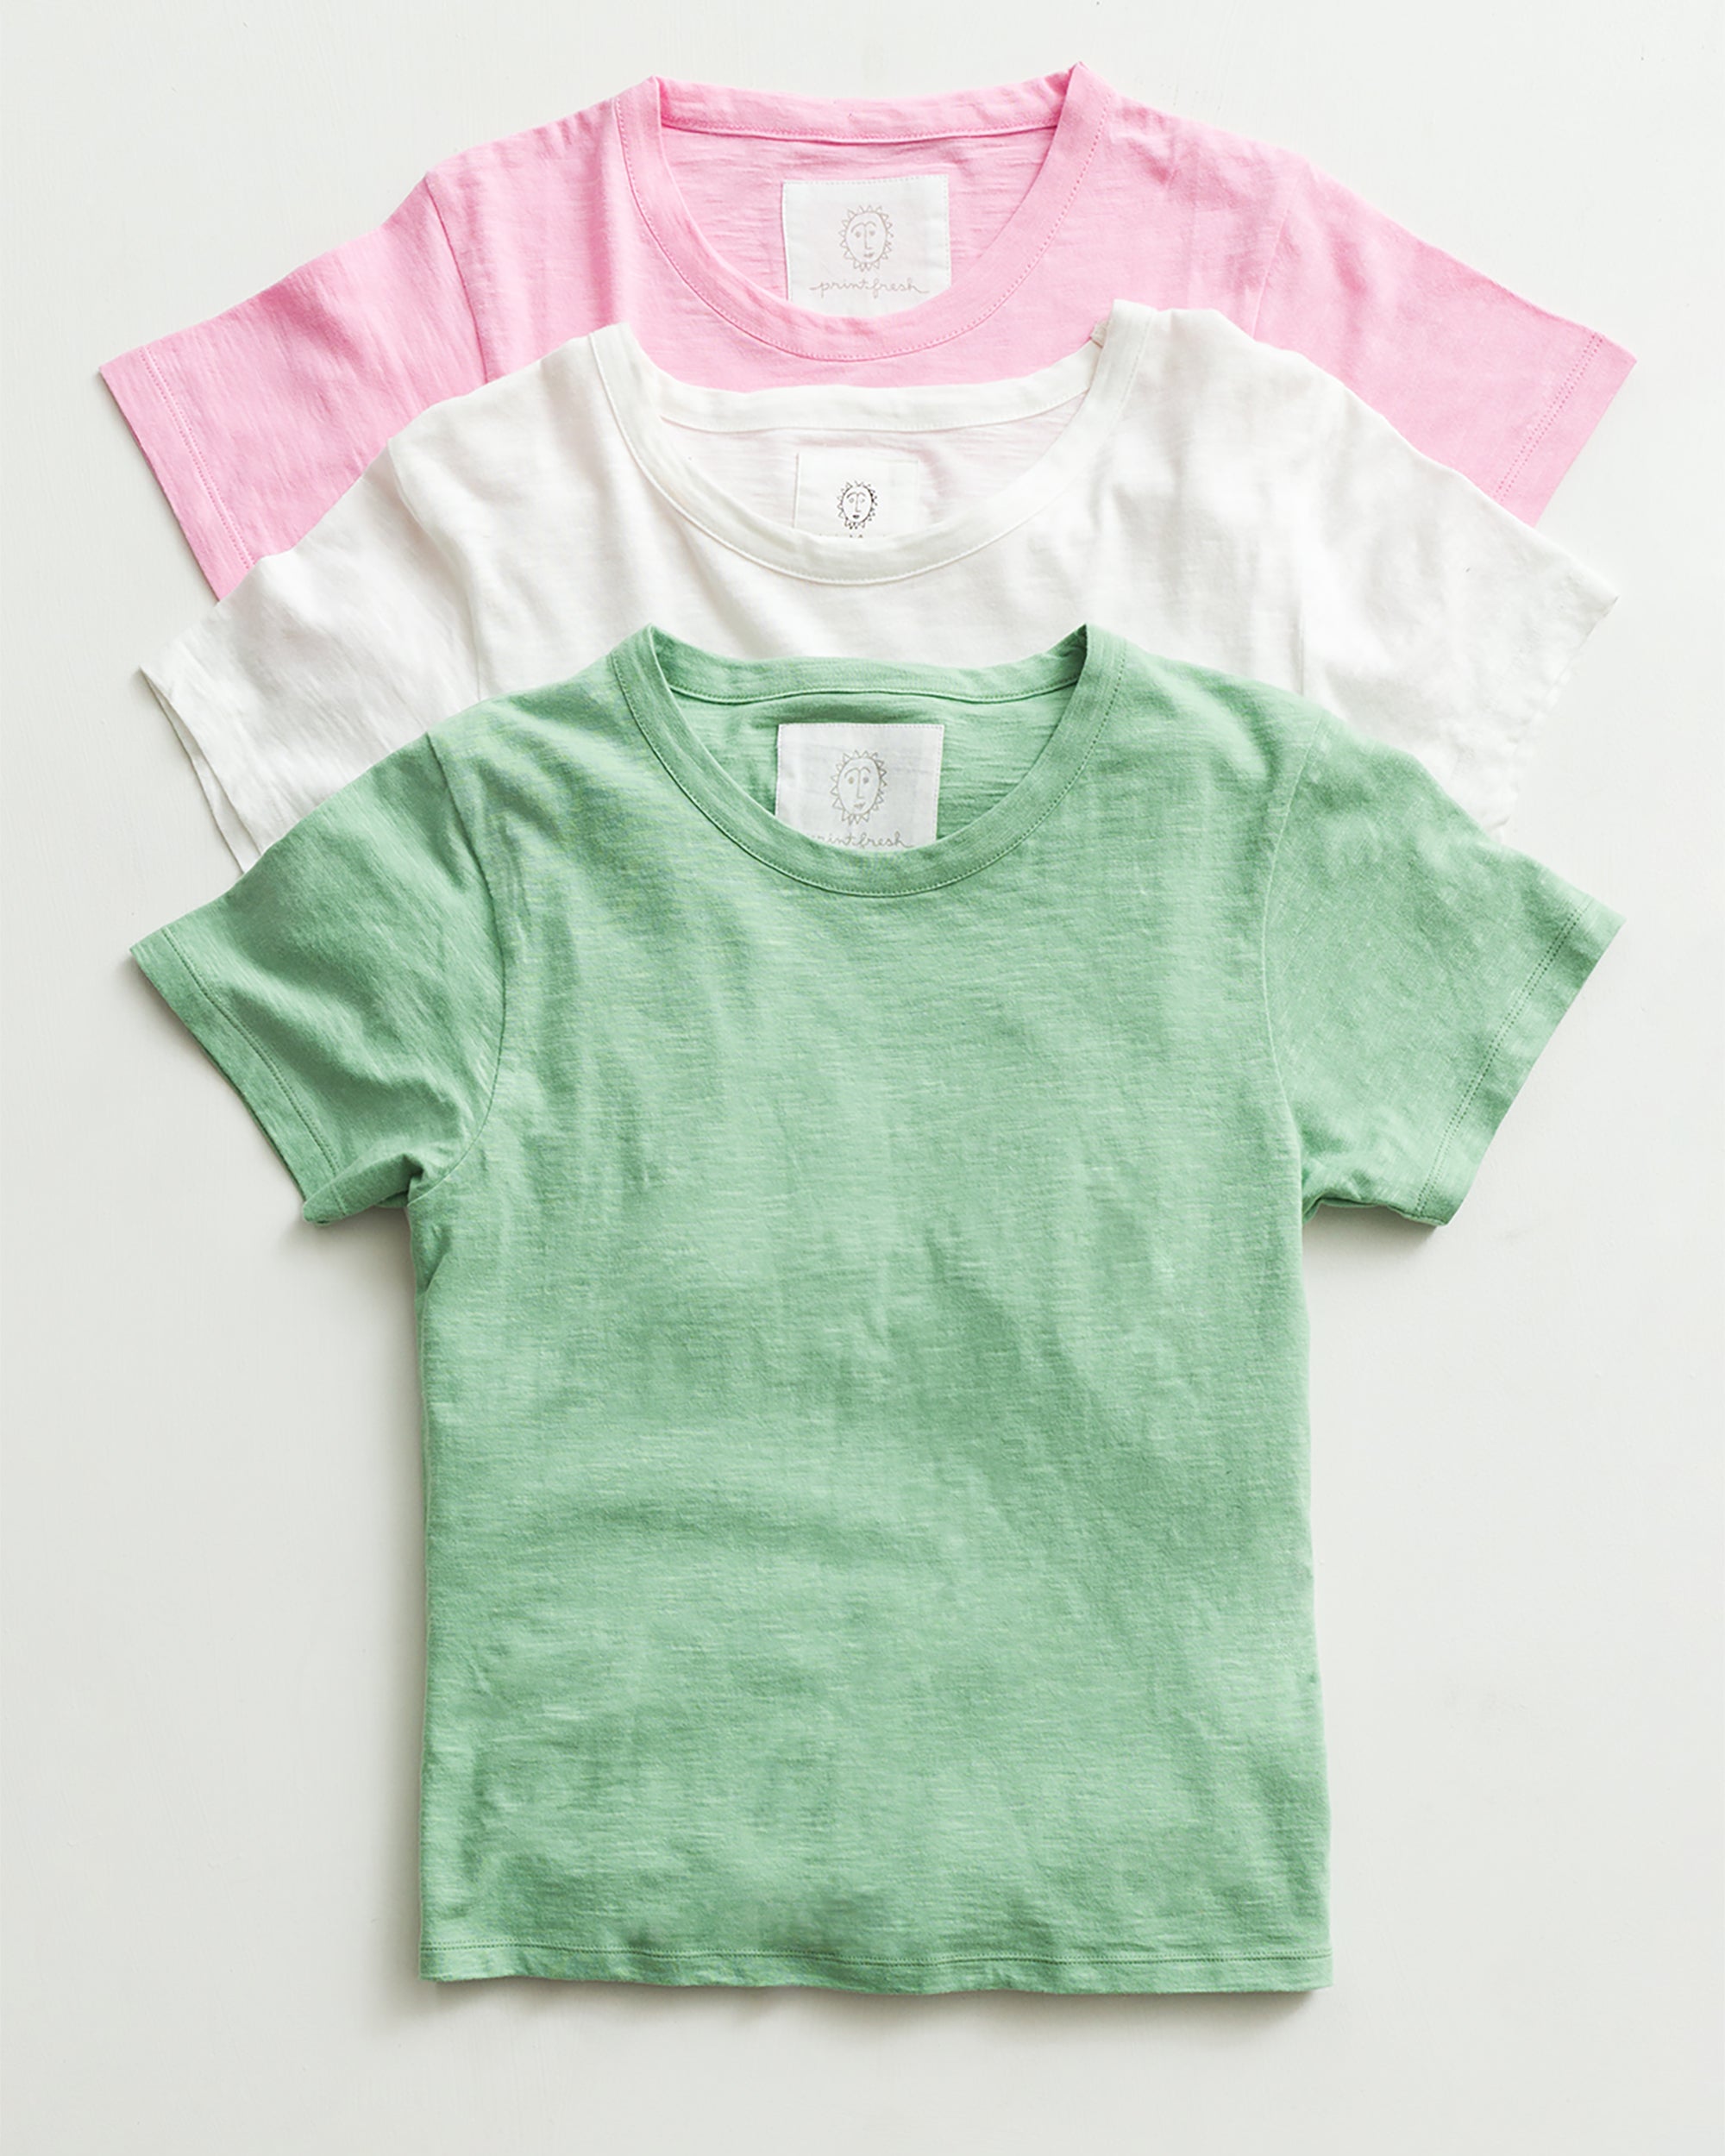 Saturday Tee - Knit T-Shirt 3-Pack - Spa Green/Pink Corvette/Cloud - Printfresh